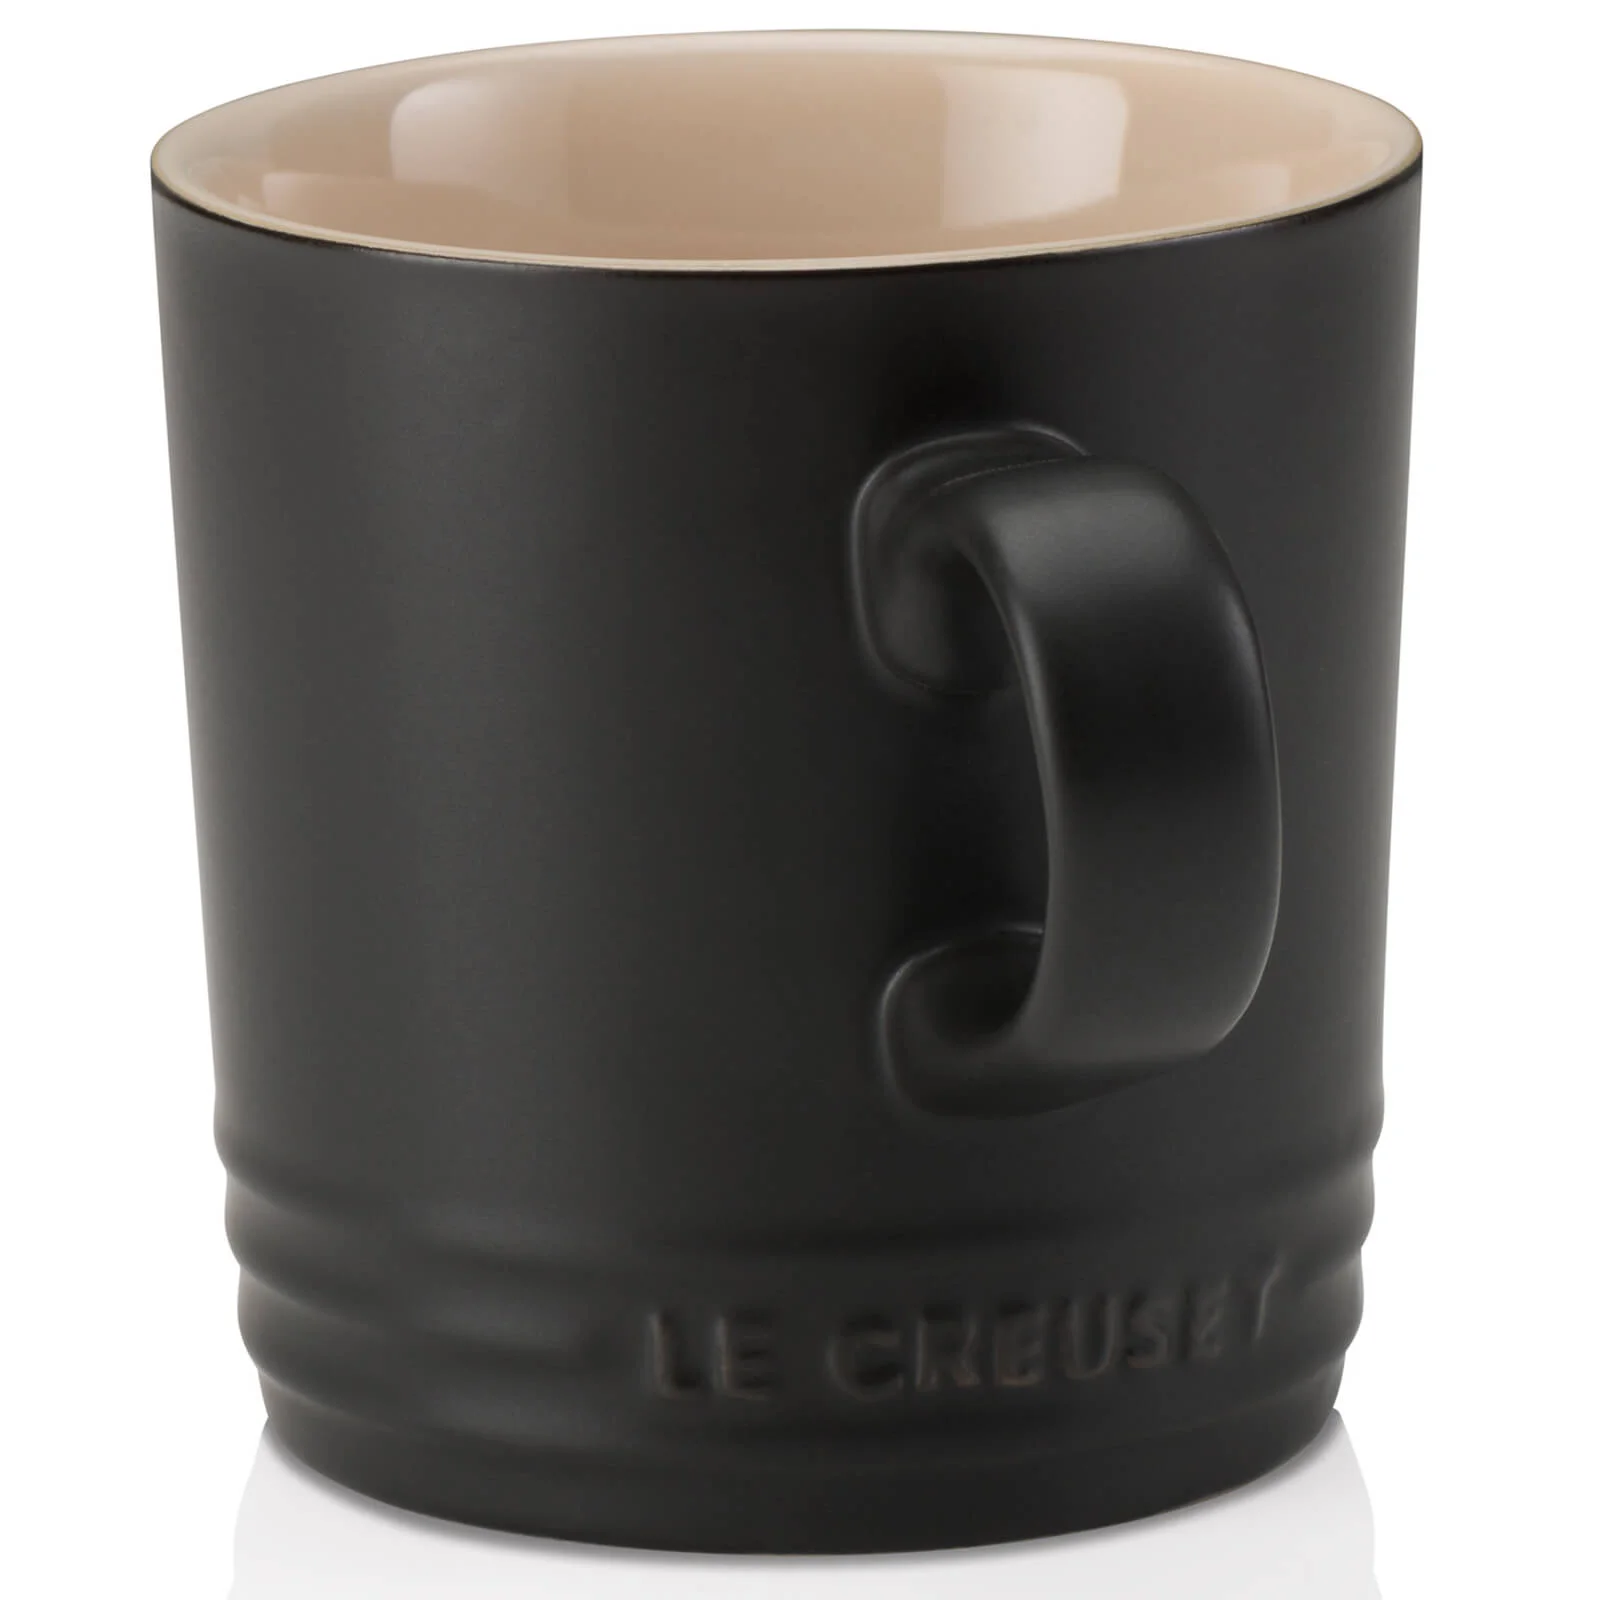 Le Creuset Stoneware Mug, 350ml - Satin Black Image 1